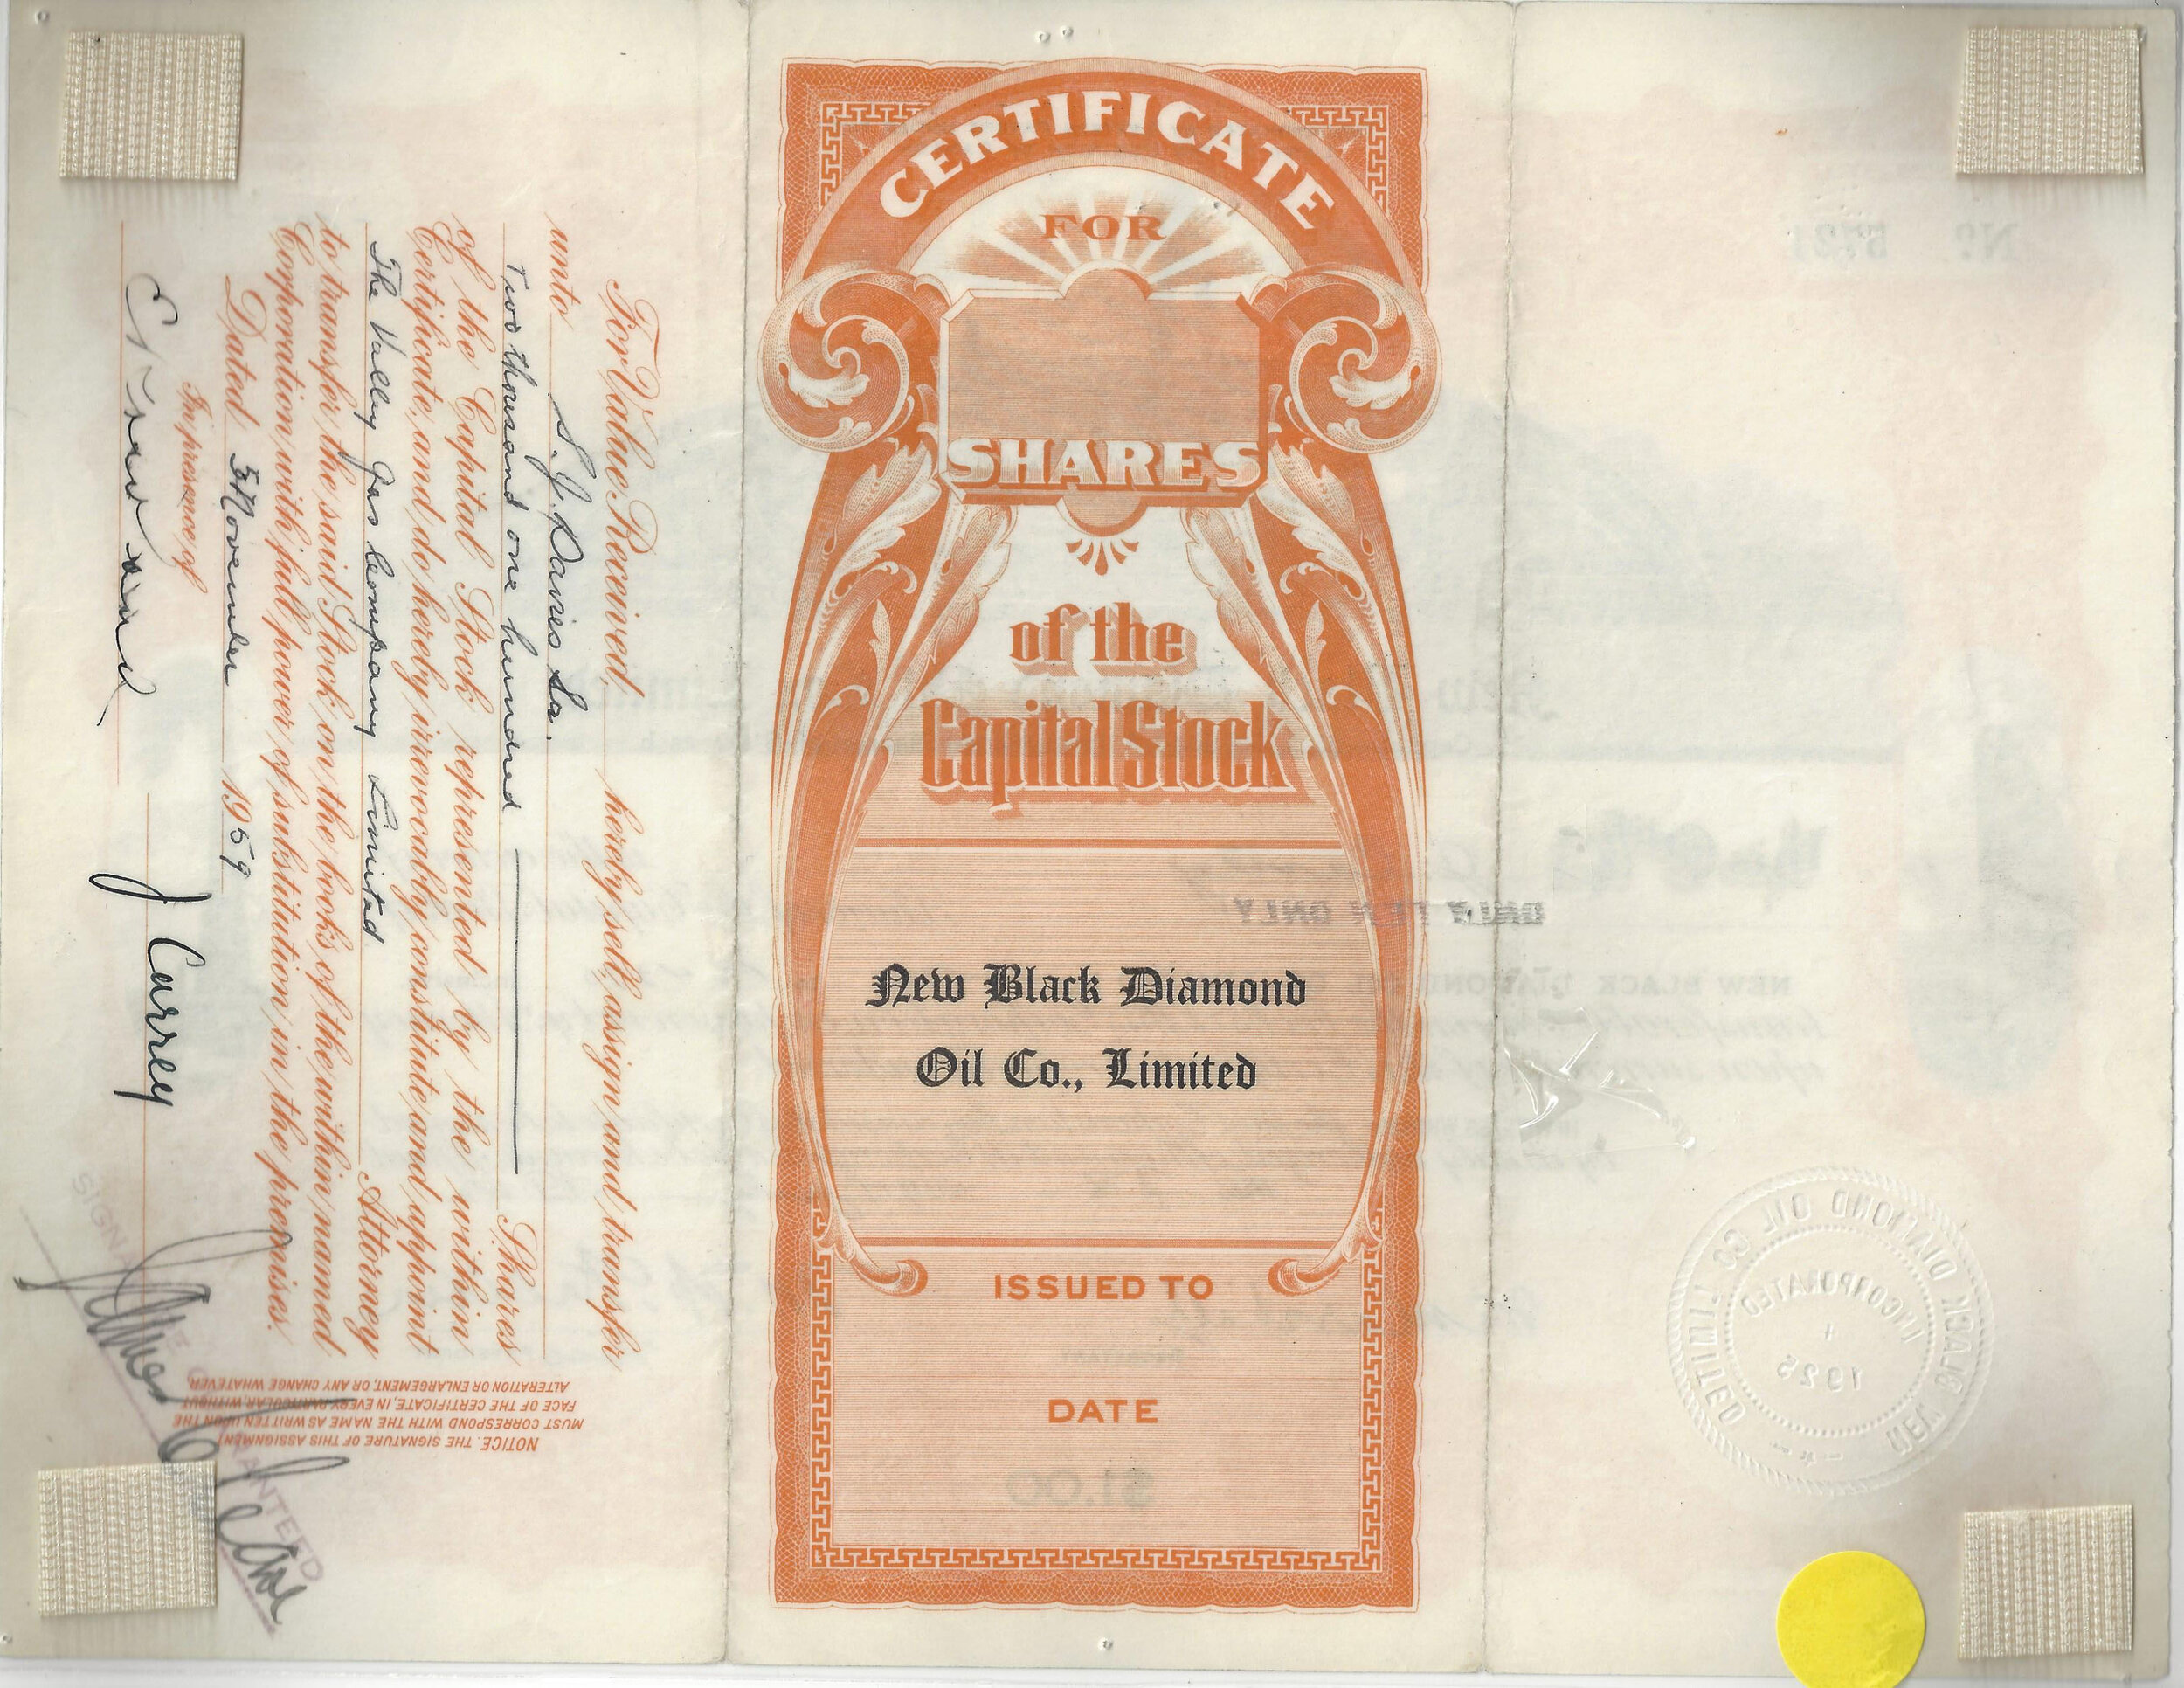 New Black Diamond Oil Co., Limited 1959  - stock certificate-2.jpg